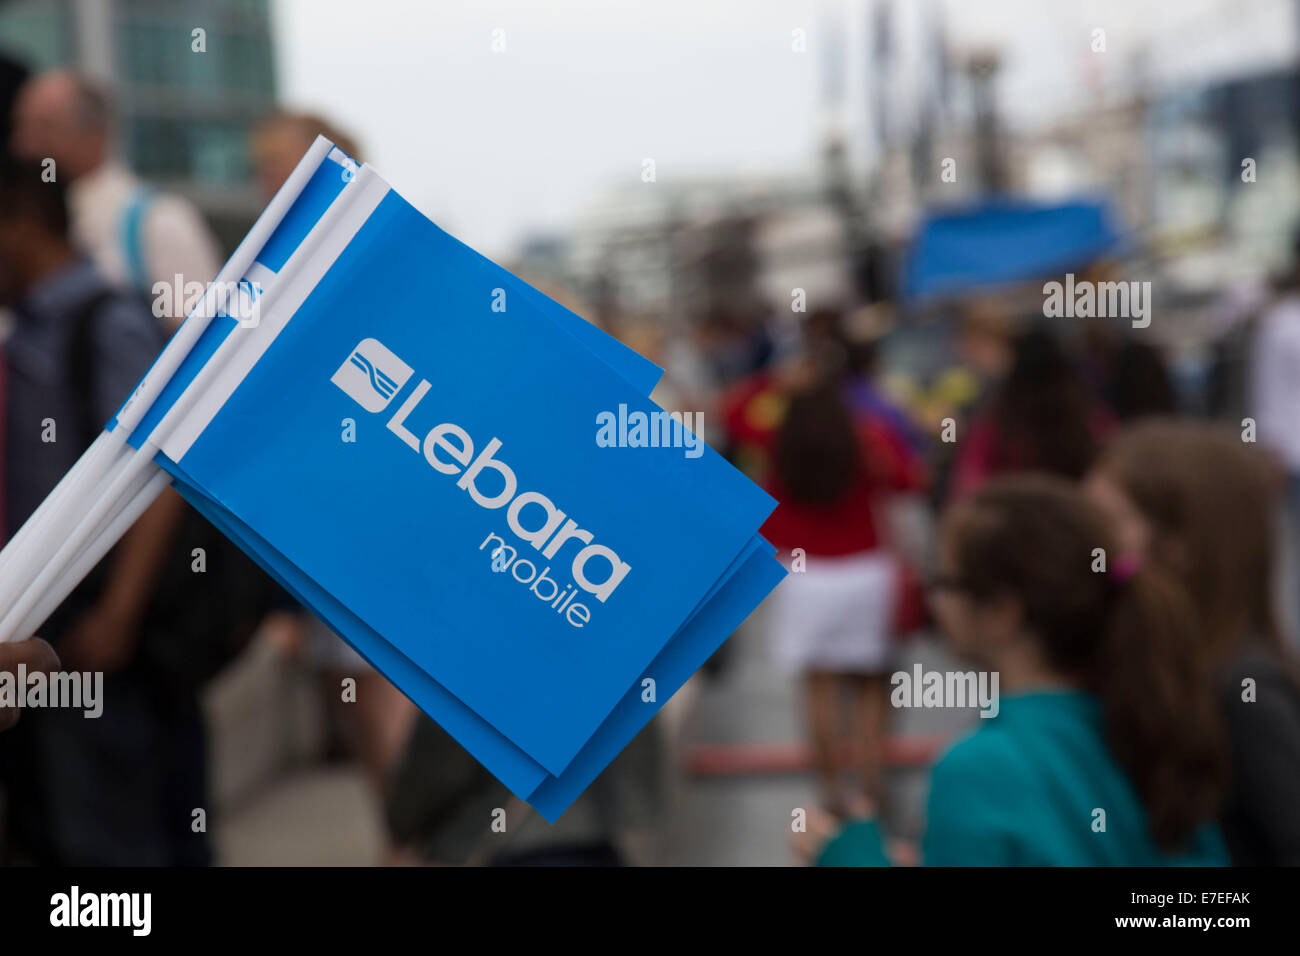 Lebara mobile promotion. Lebara Group is a telecommunications company providing Pay As You Go mobile SIM cards. Stock Photo